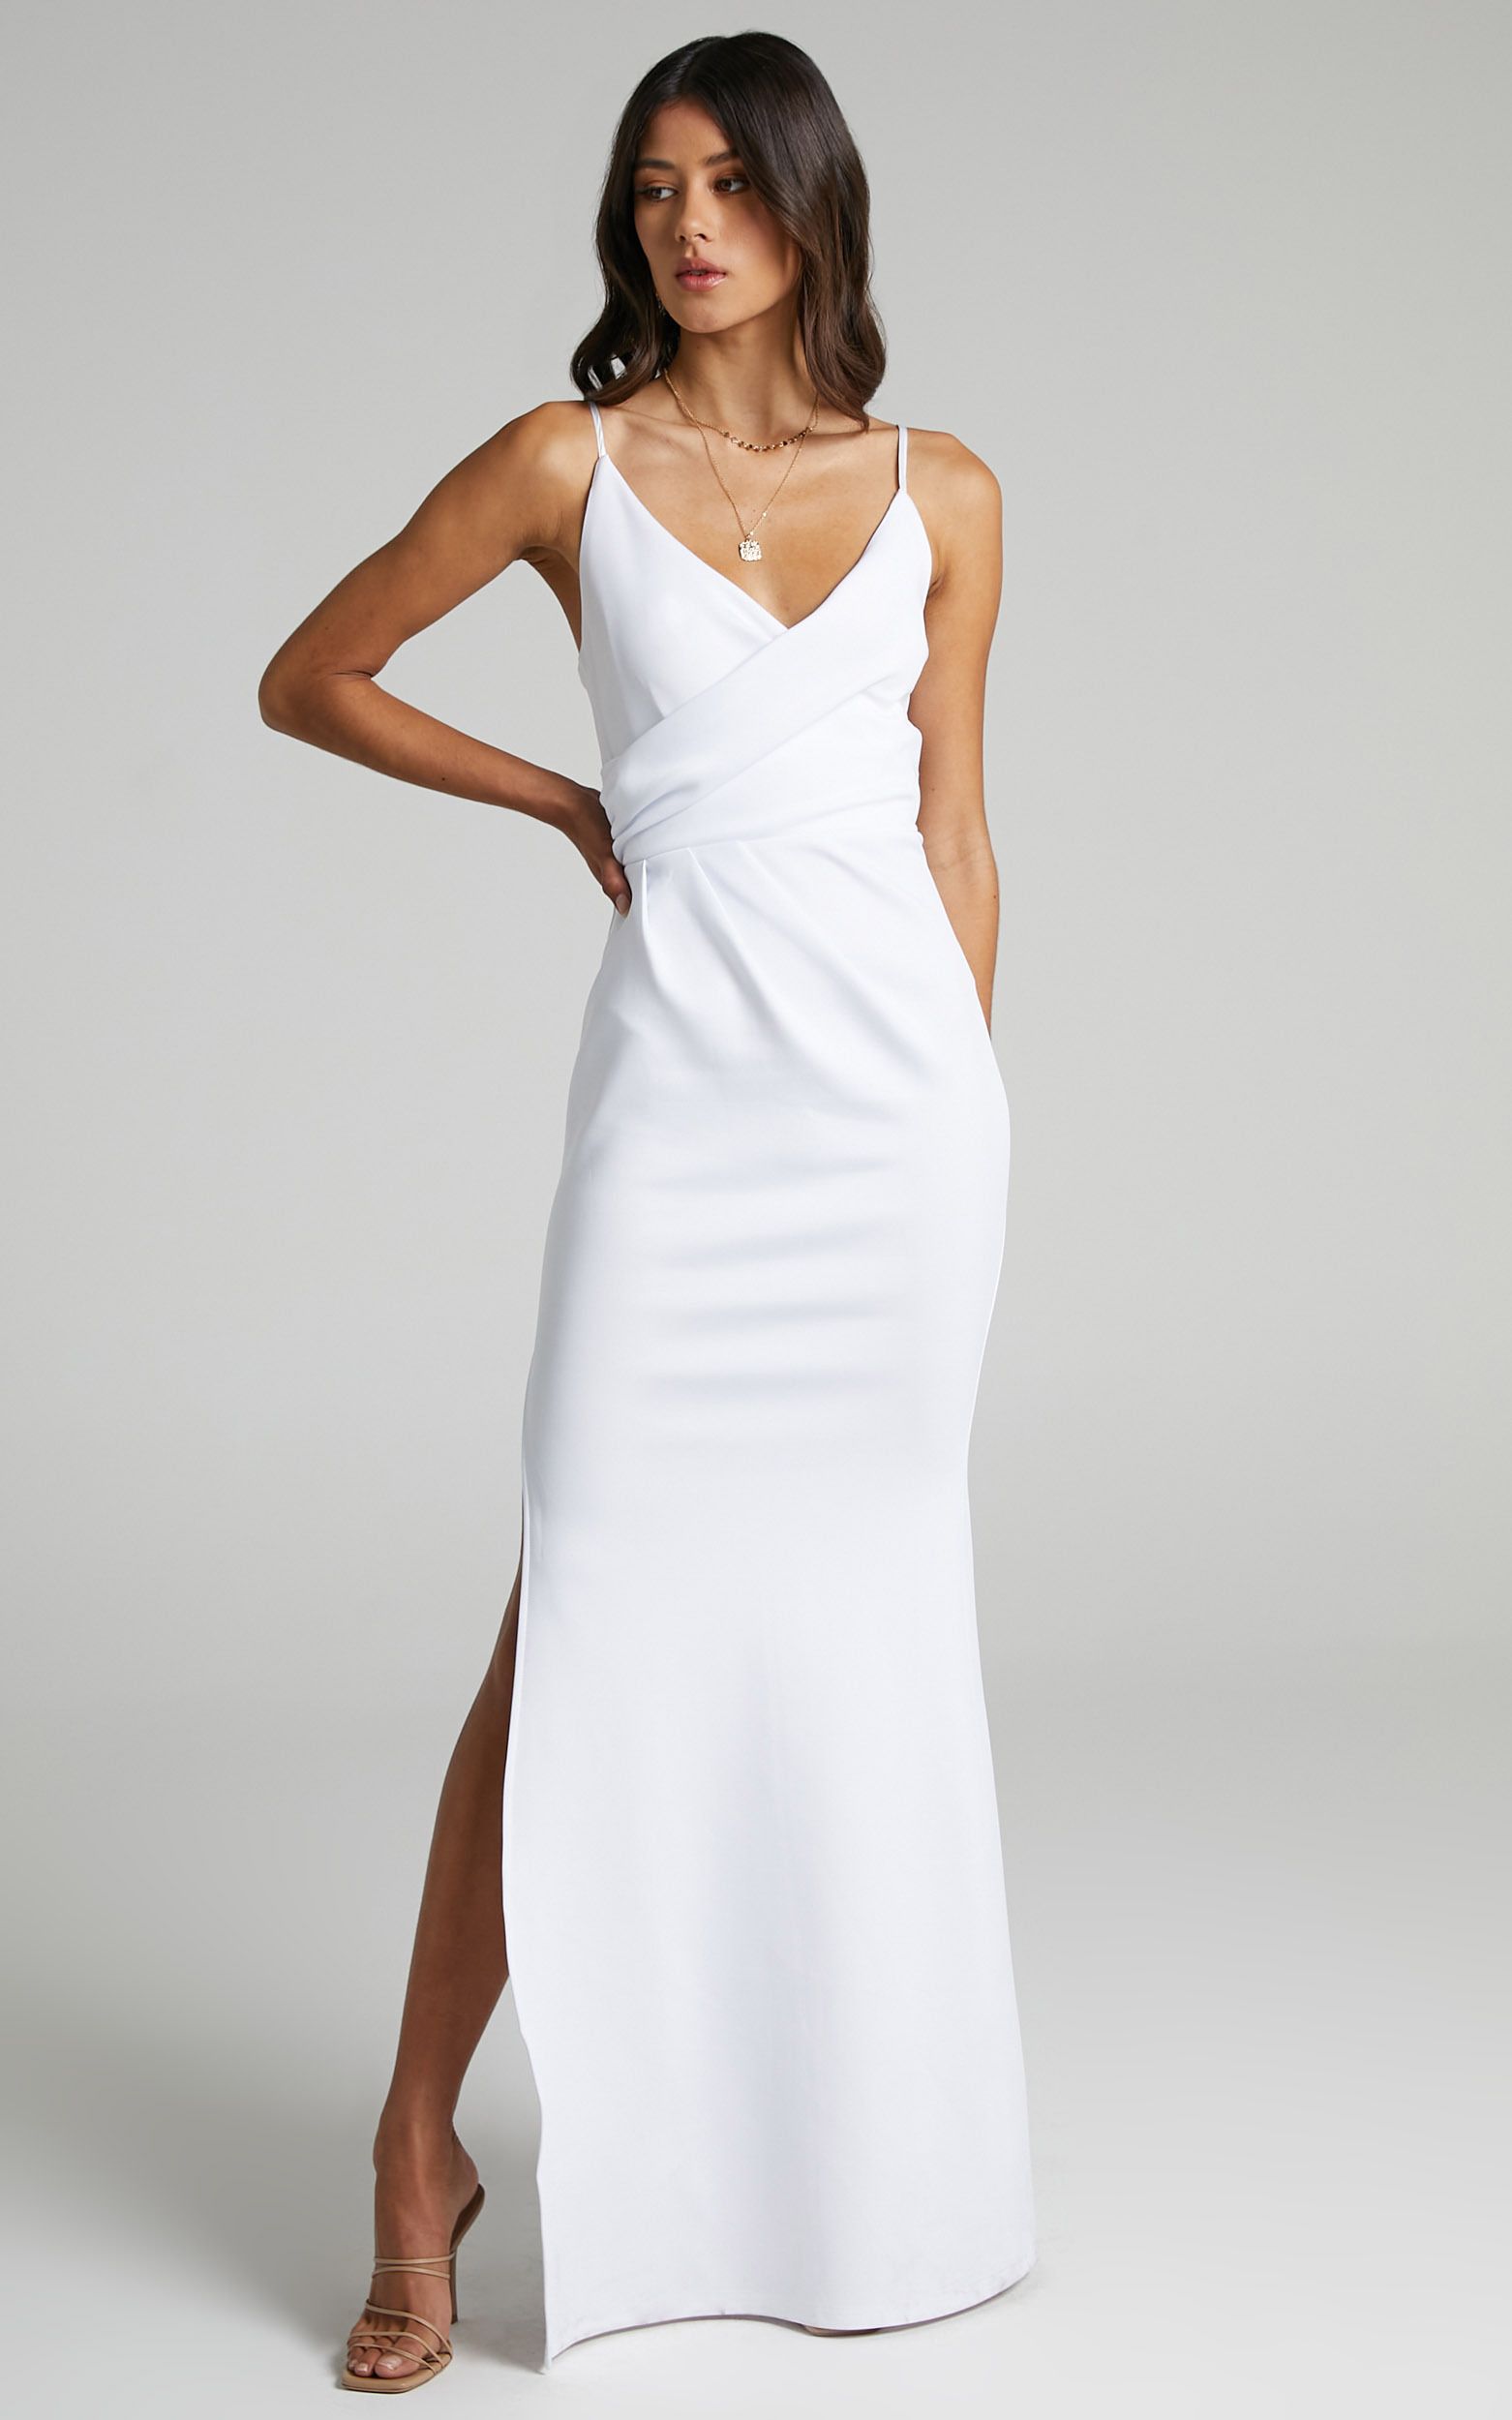 Linking Love Maxi Dress in White | Showpo - deactived